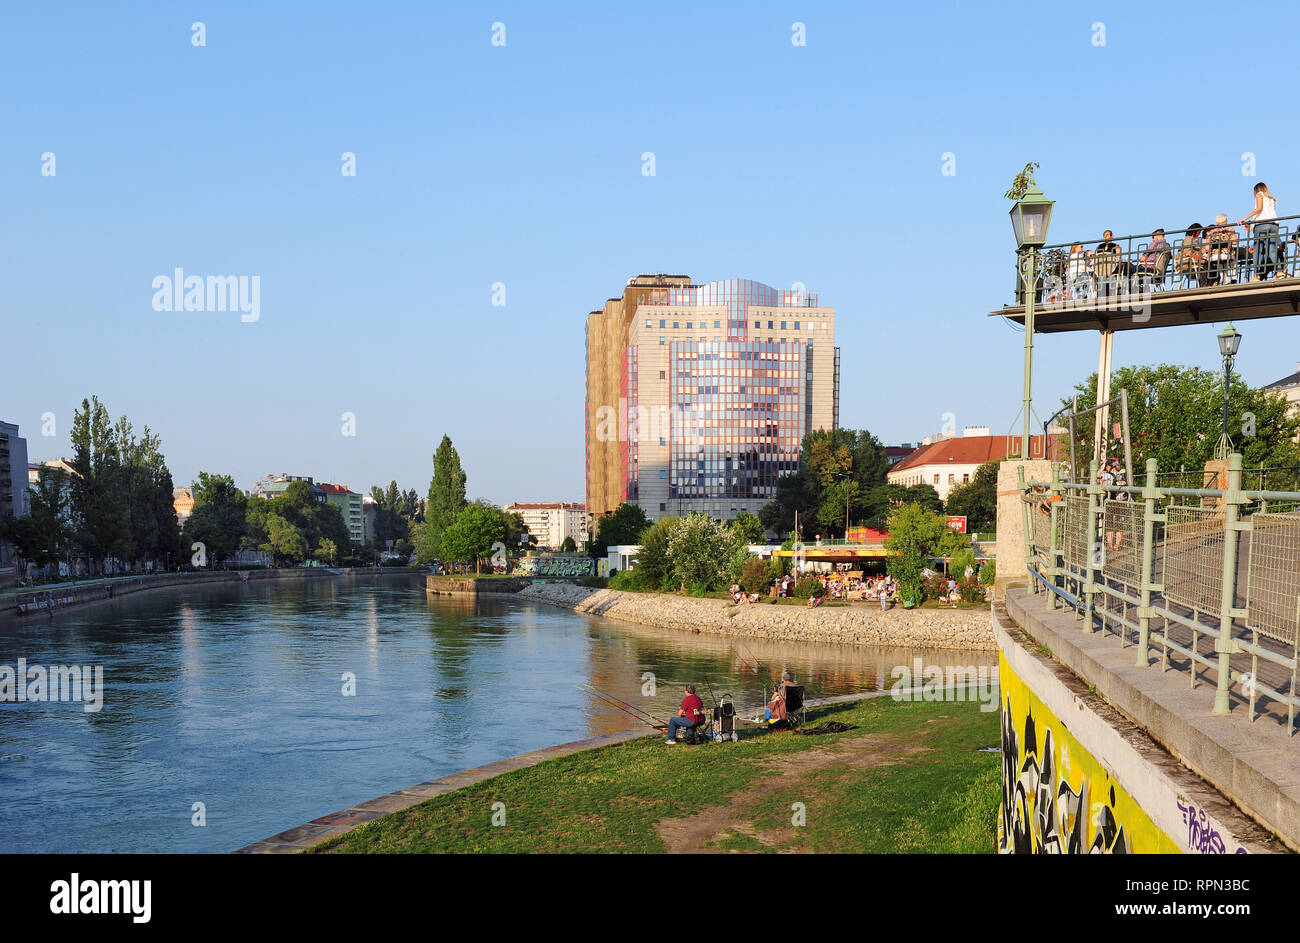 Donaukanal in estate, Vienna, Austria Foto Stock